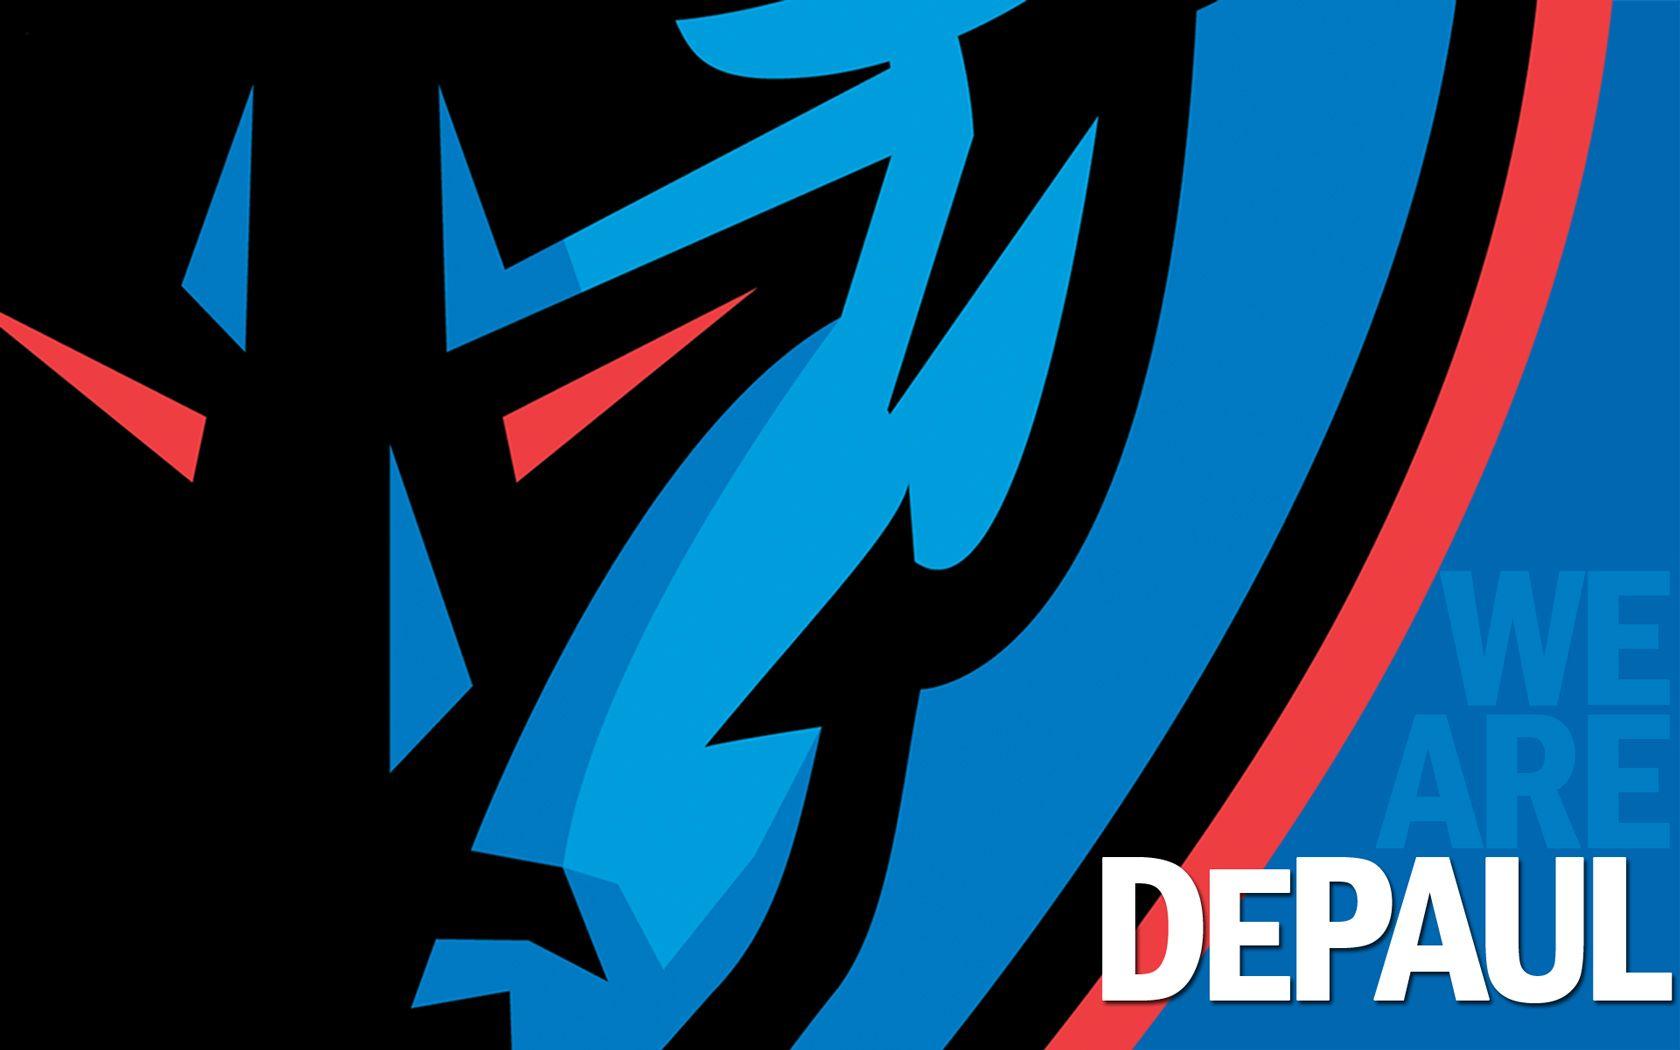 Depual Logo - Wallpapers - DePaul University Athletics